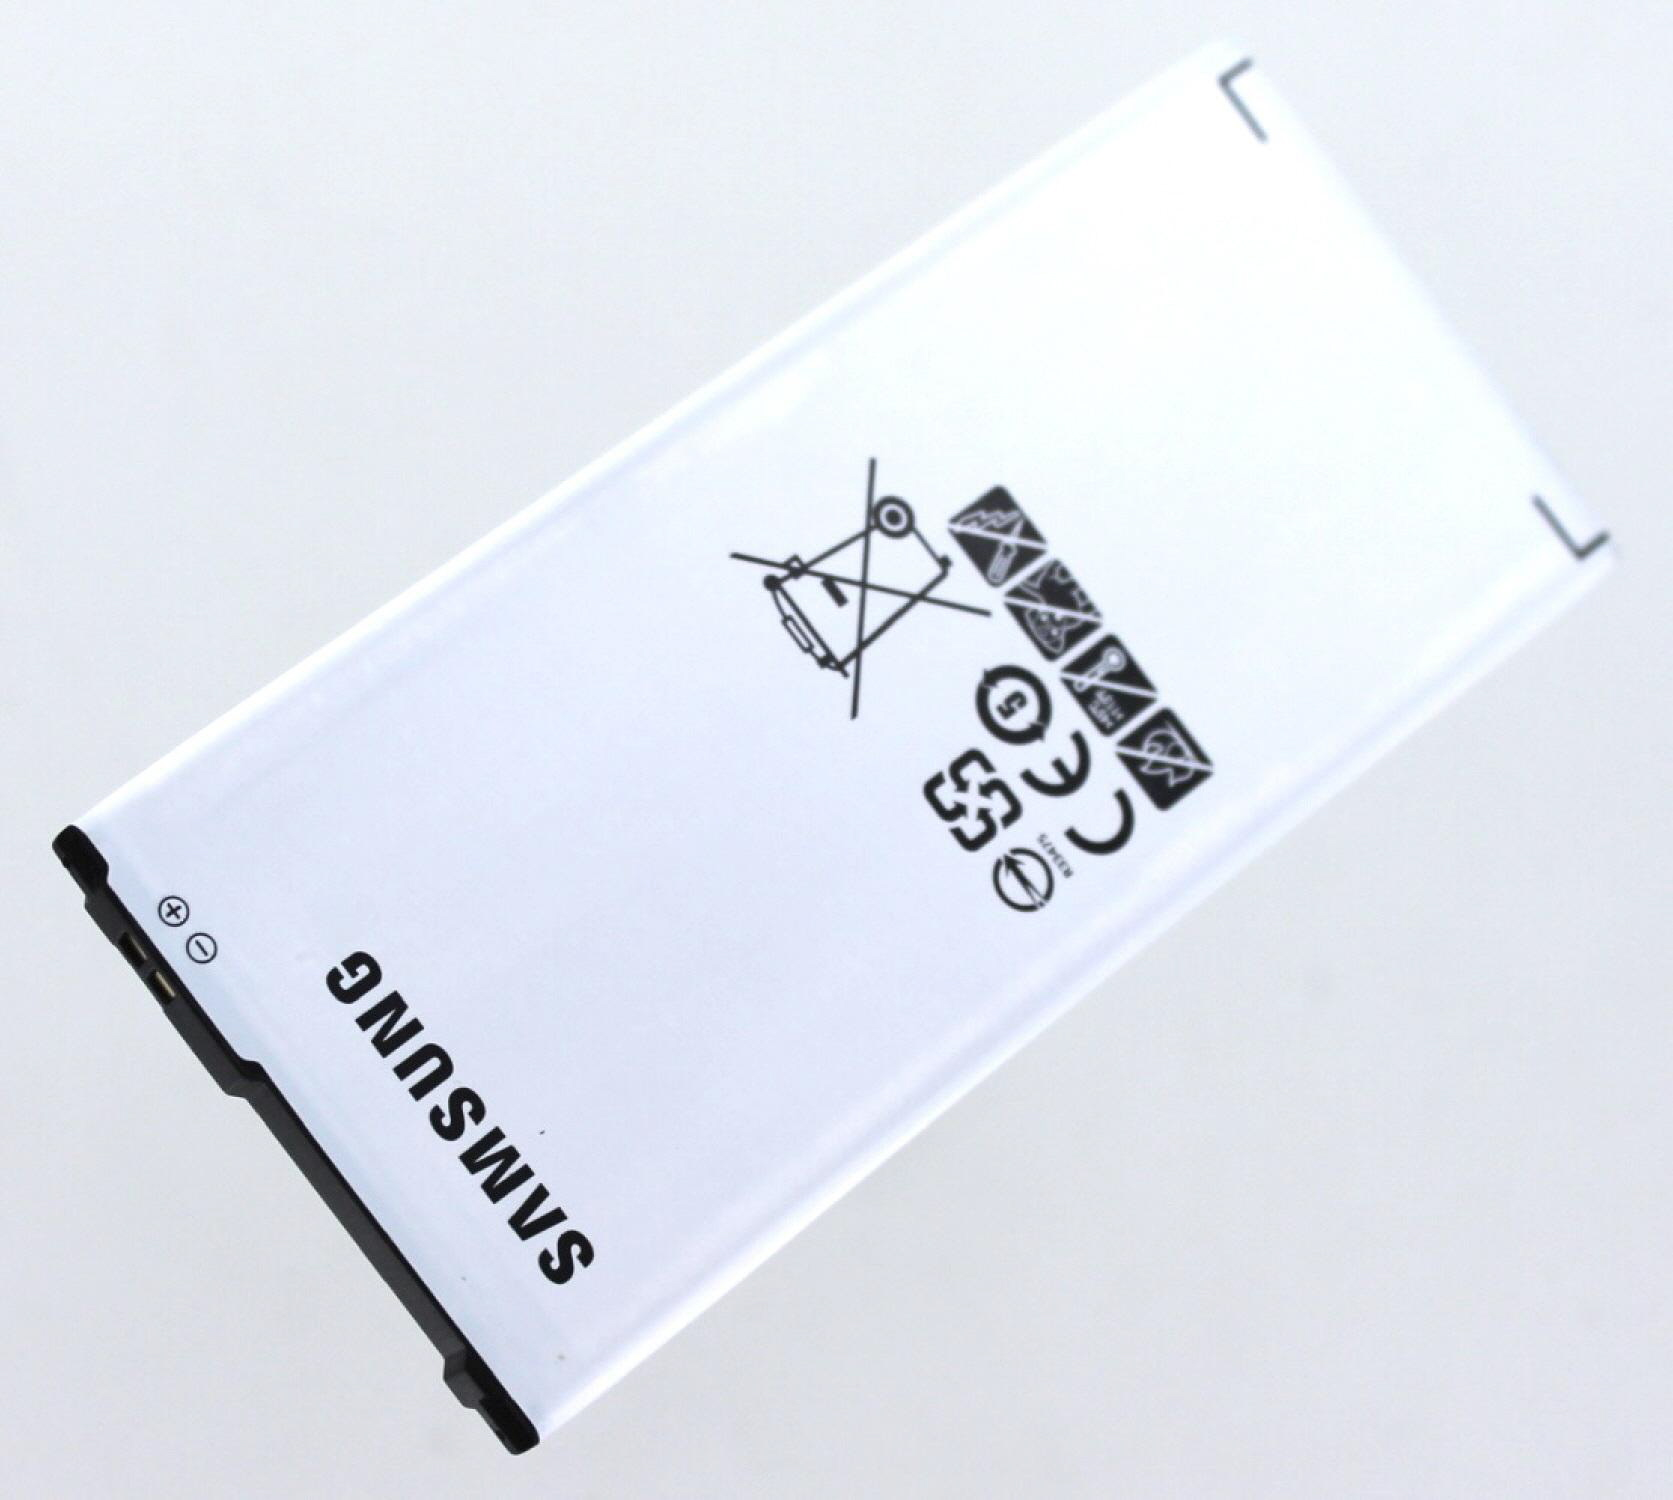 Volt, Li-Ion Handy-/Smartphoneakku, 3.85 Original mAh EB-BA510ABE Li-Ion, Samsung SAMSUNG 2900 Akku für